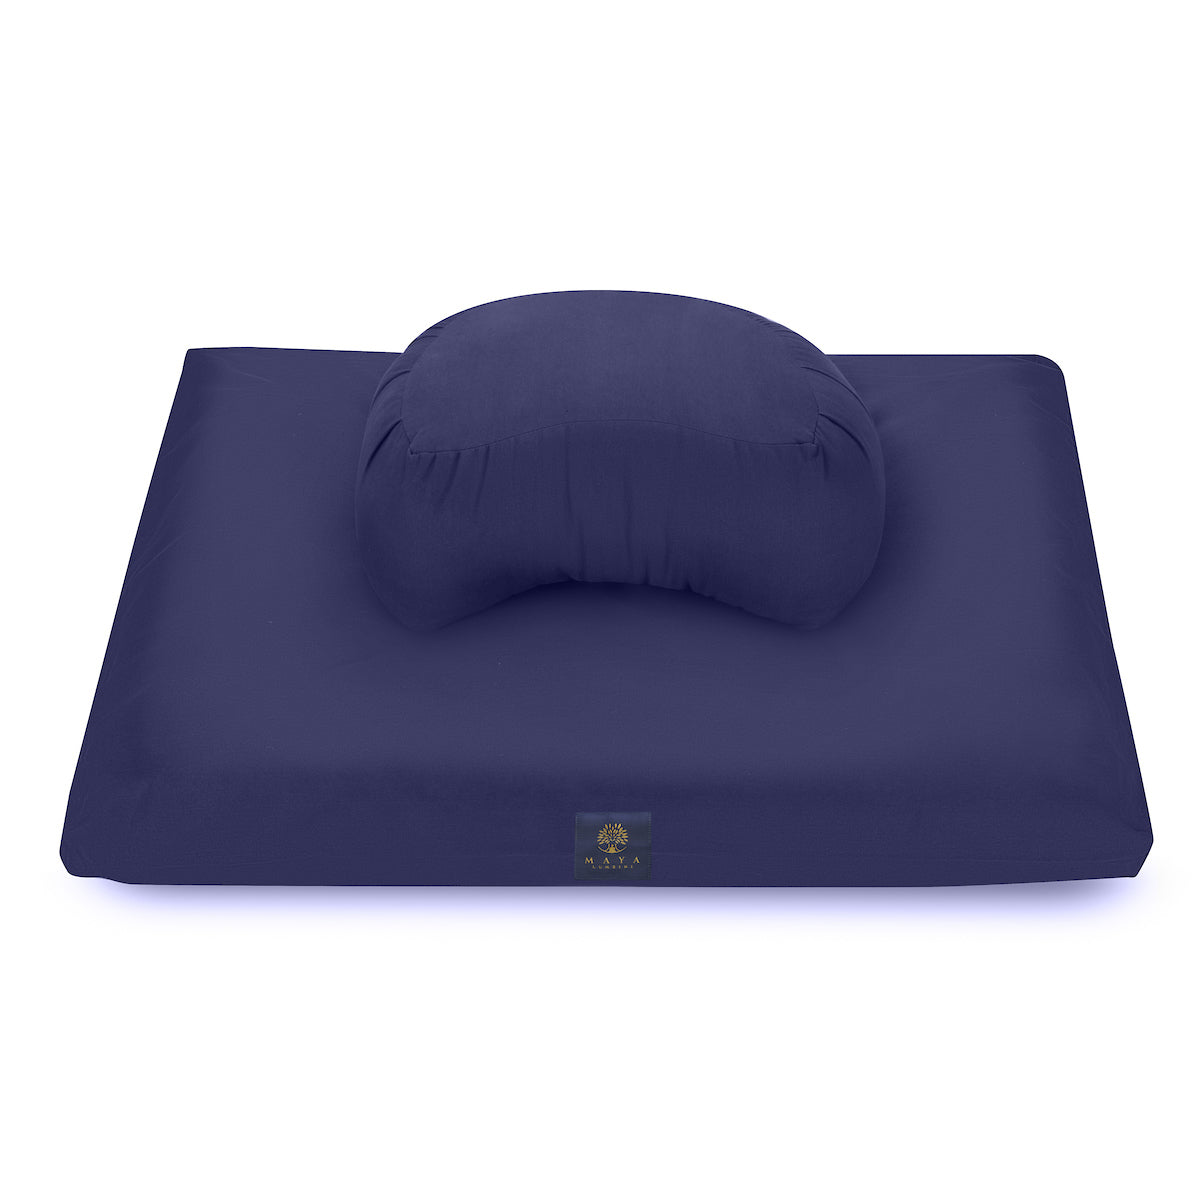 'The Comfier' Crescent Meditation Cushion Set